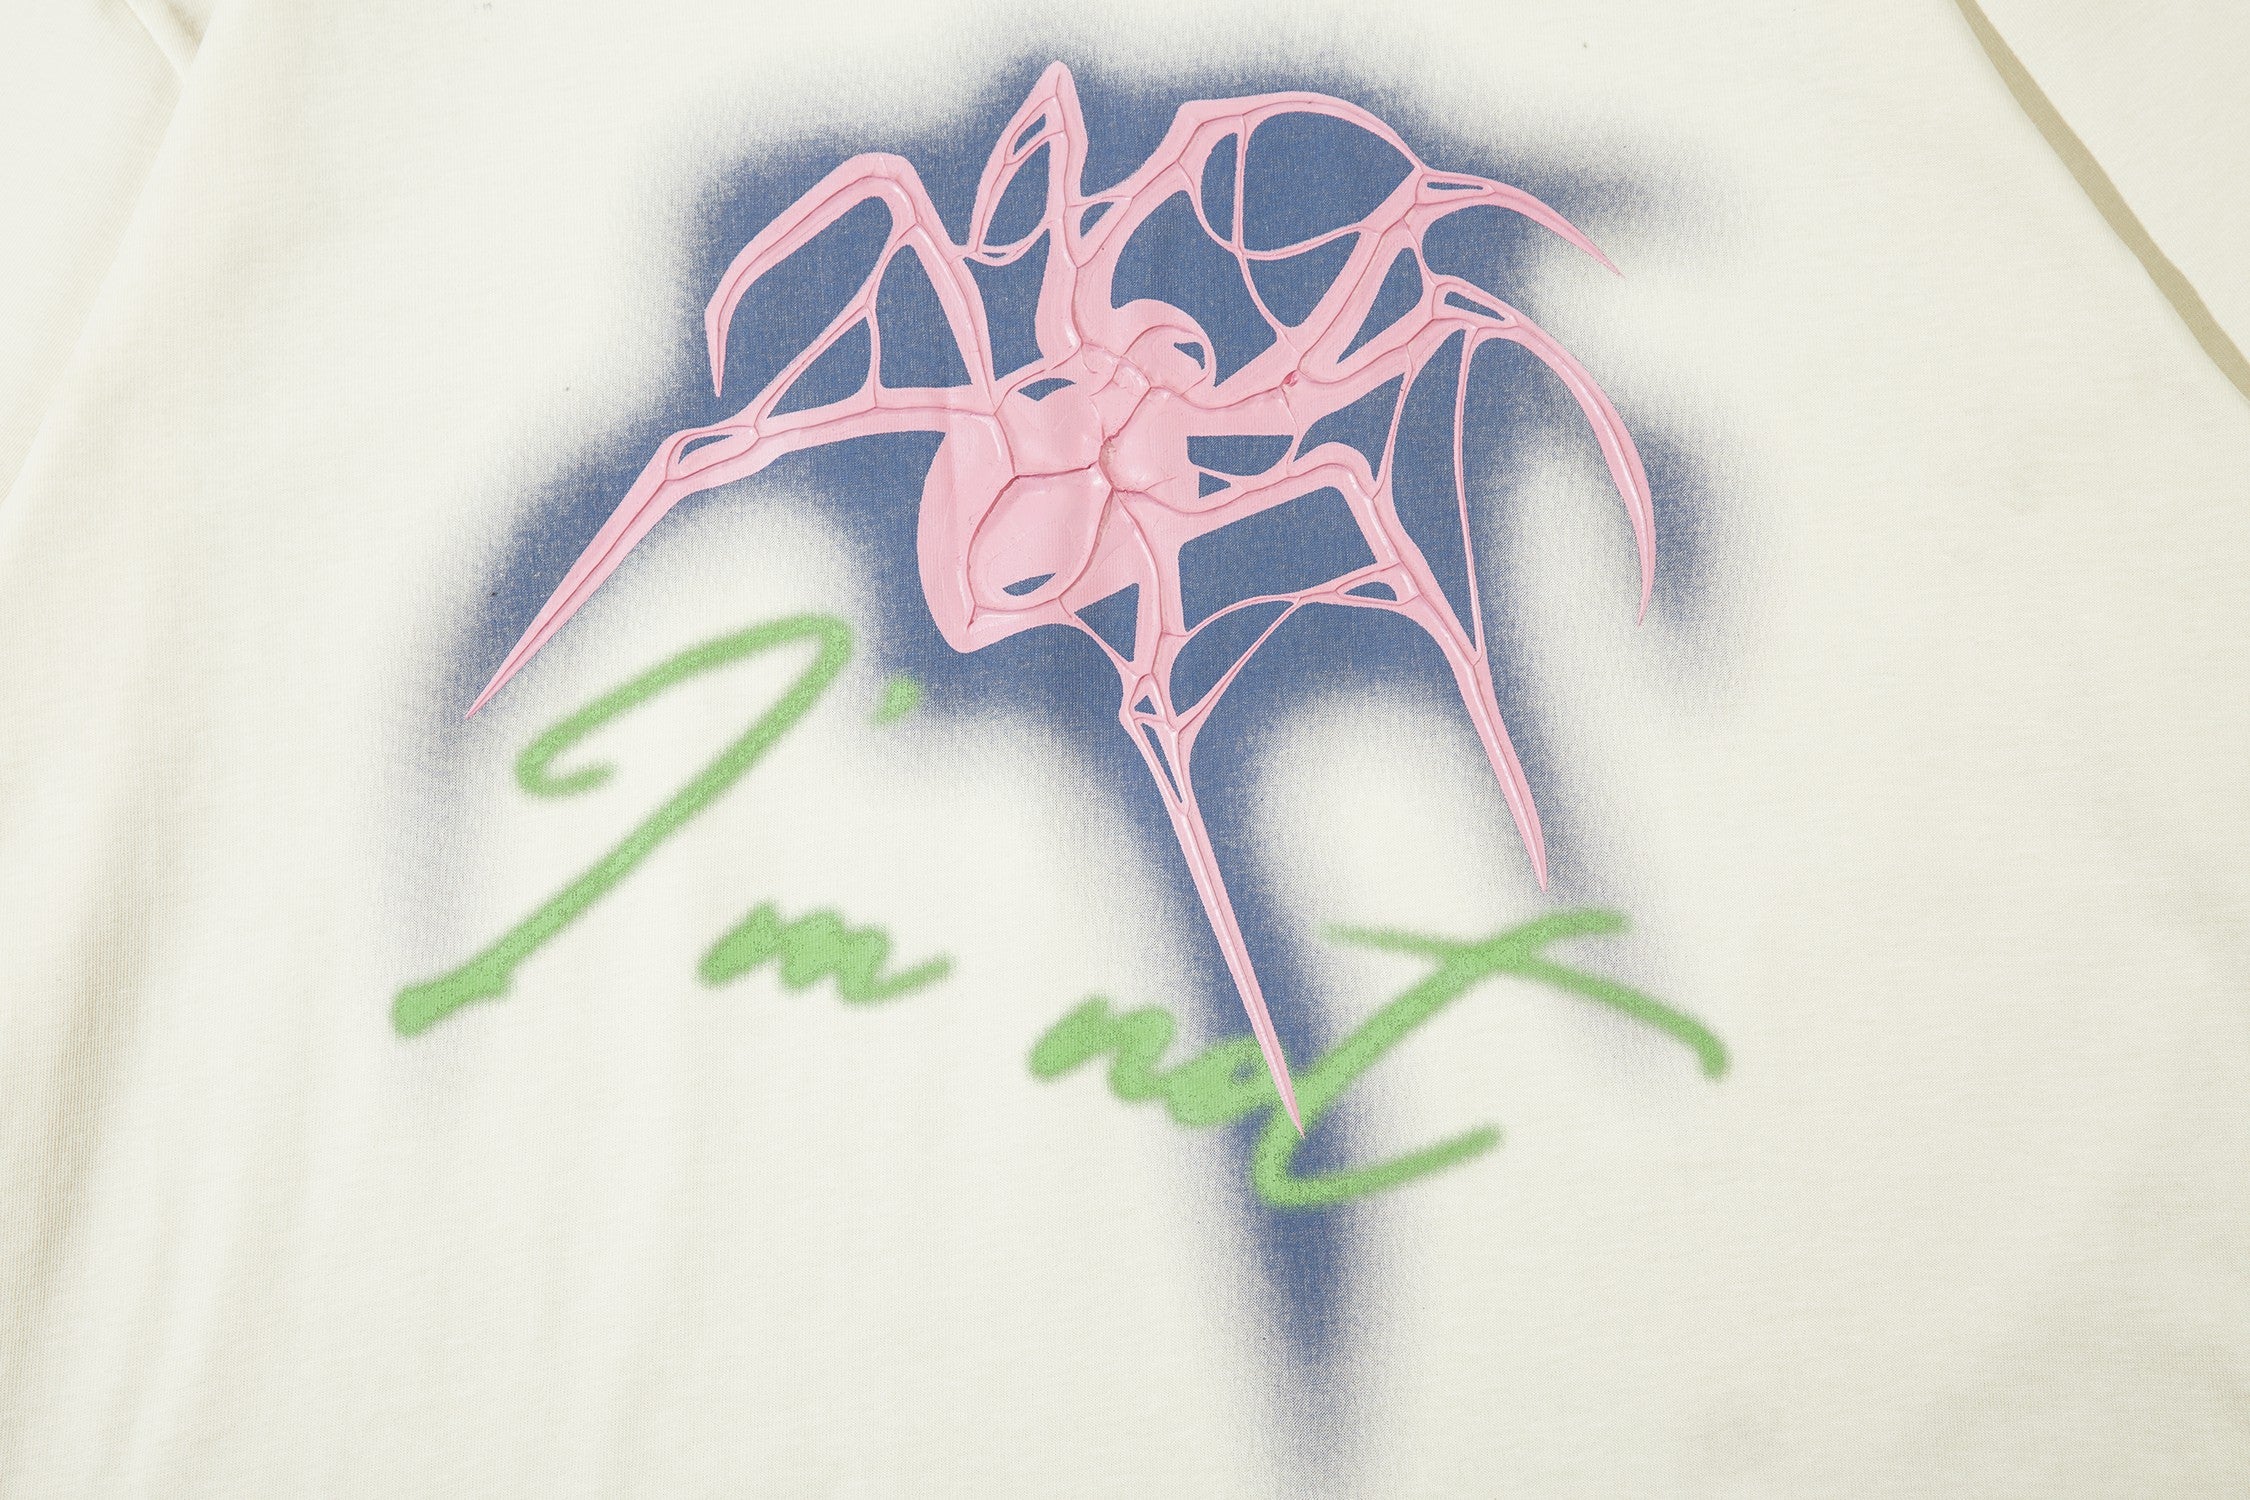 'Mystic Spider' T Shirt - Santo 